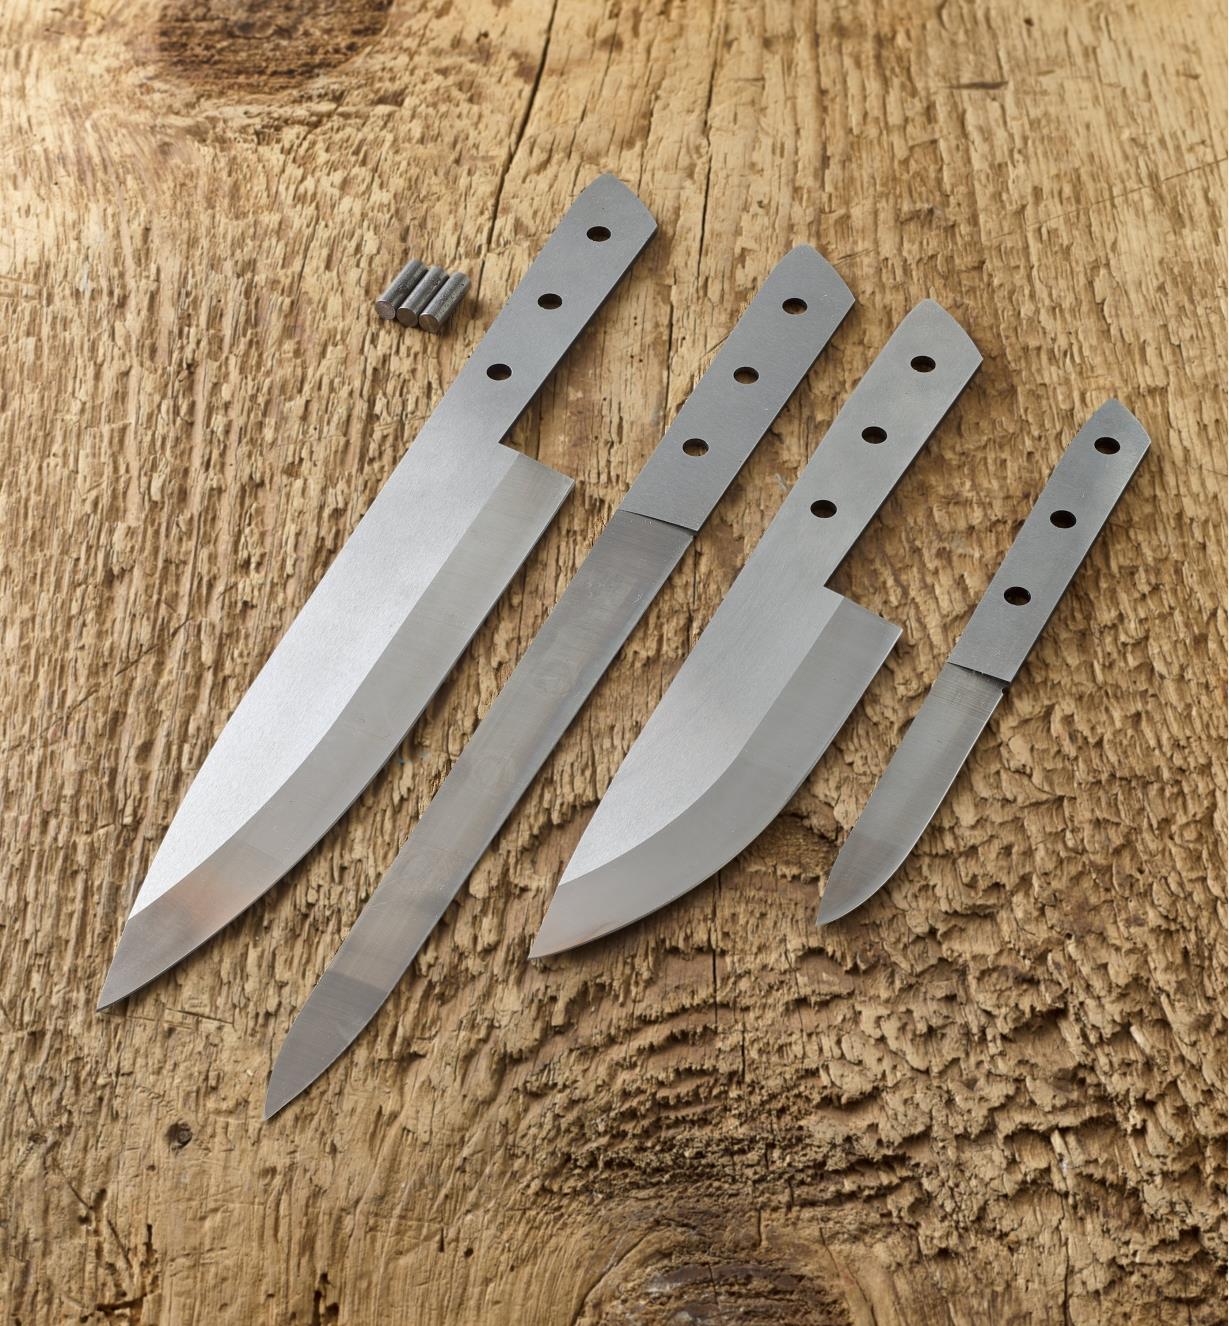 Hock Kitchen Knife Kits